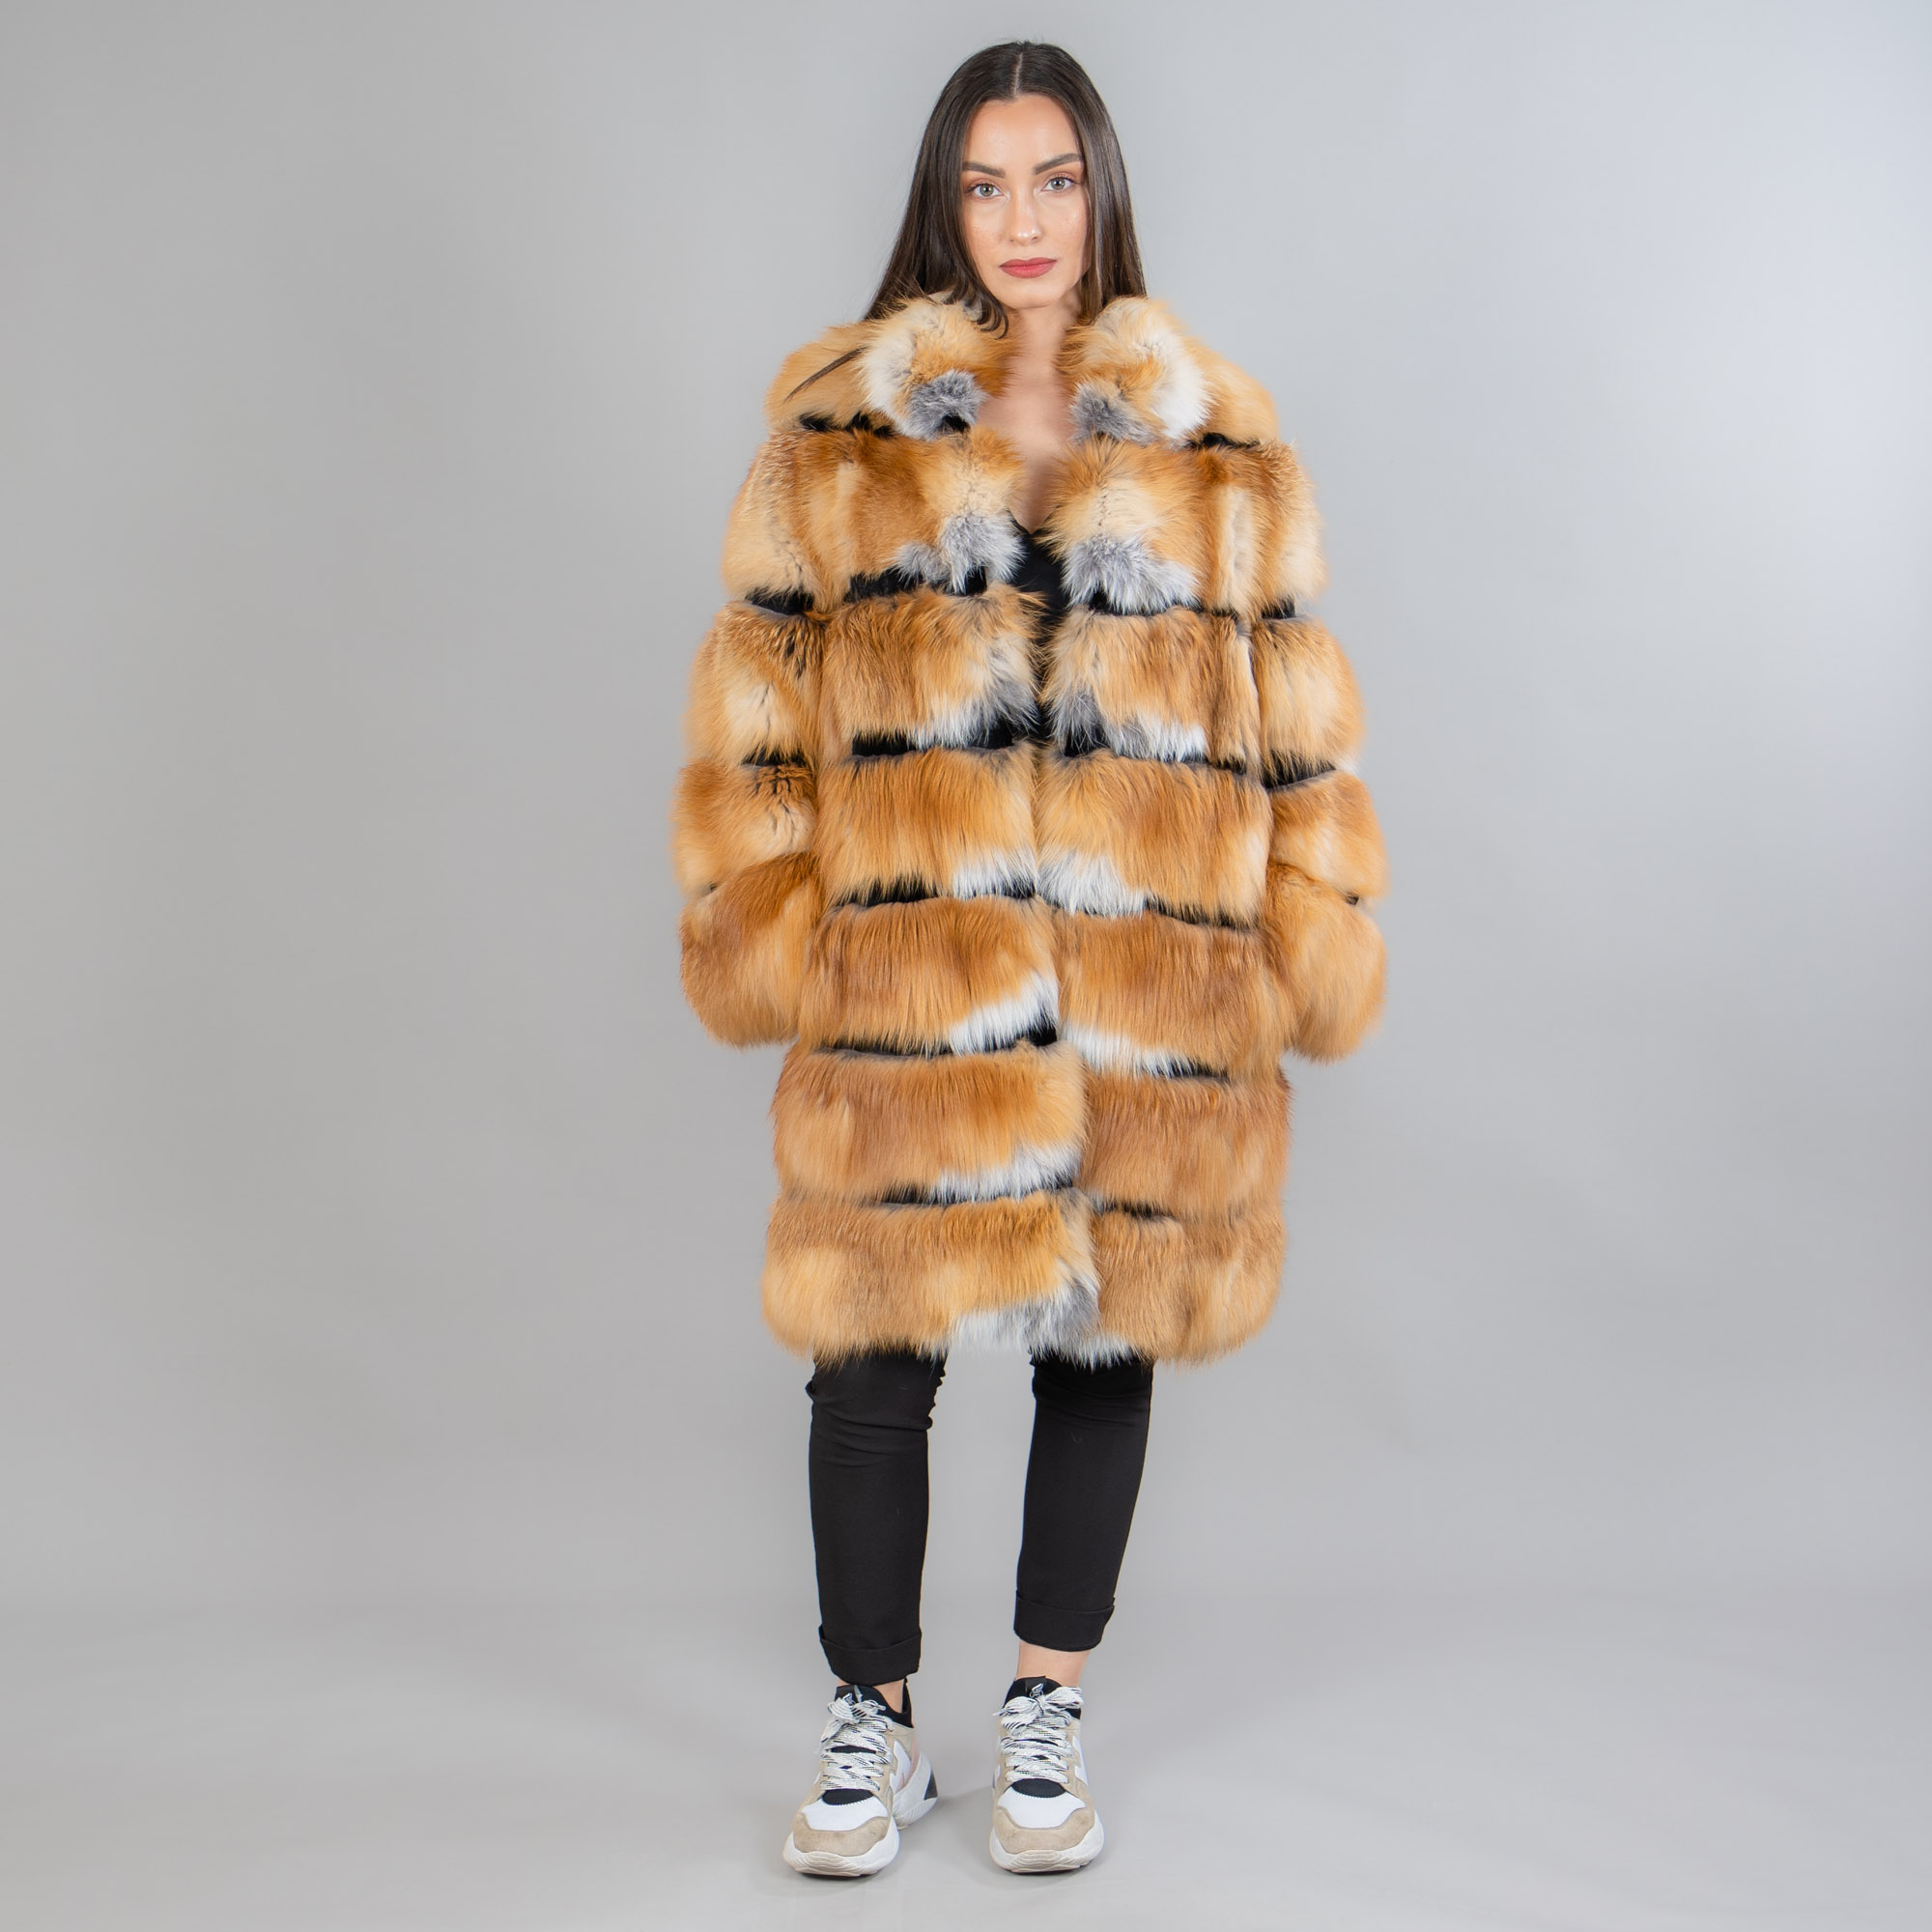 Red fox fur coat with rabbit fur details